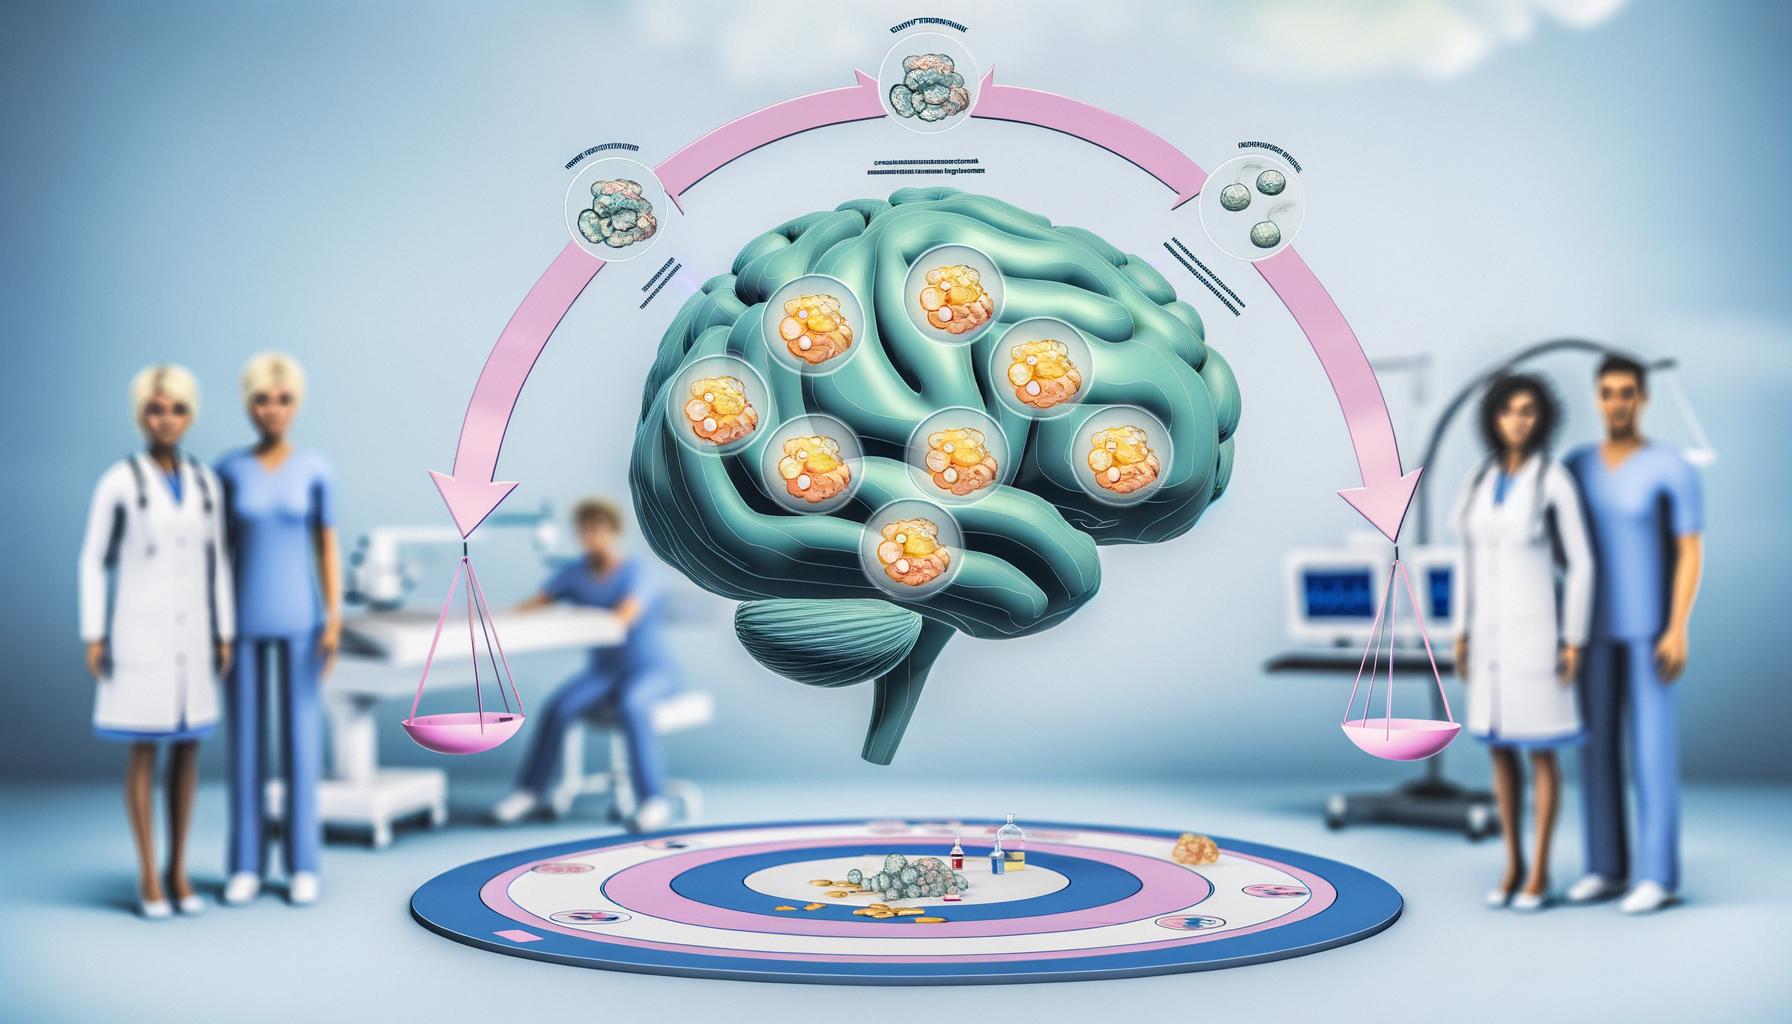 New treatment pathway for aggressive children's brain tumors identified